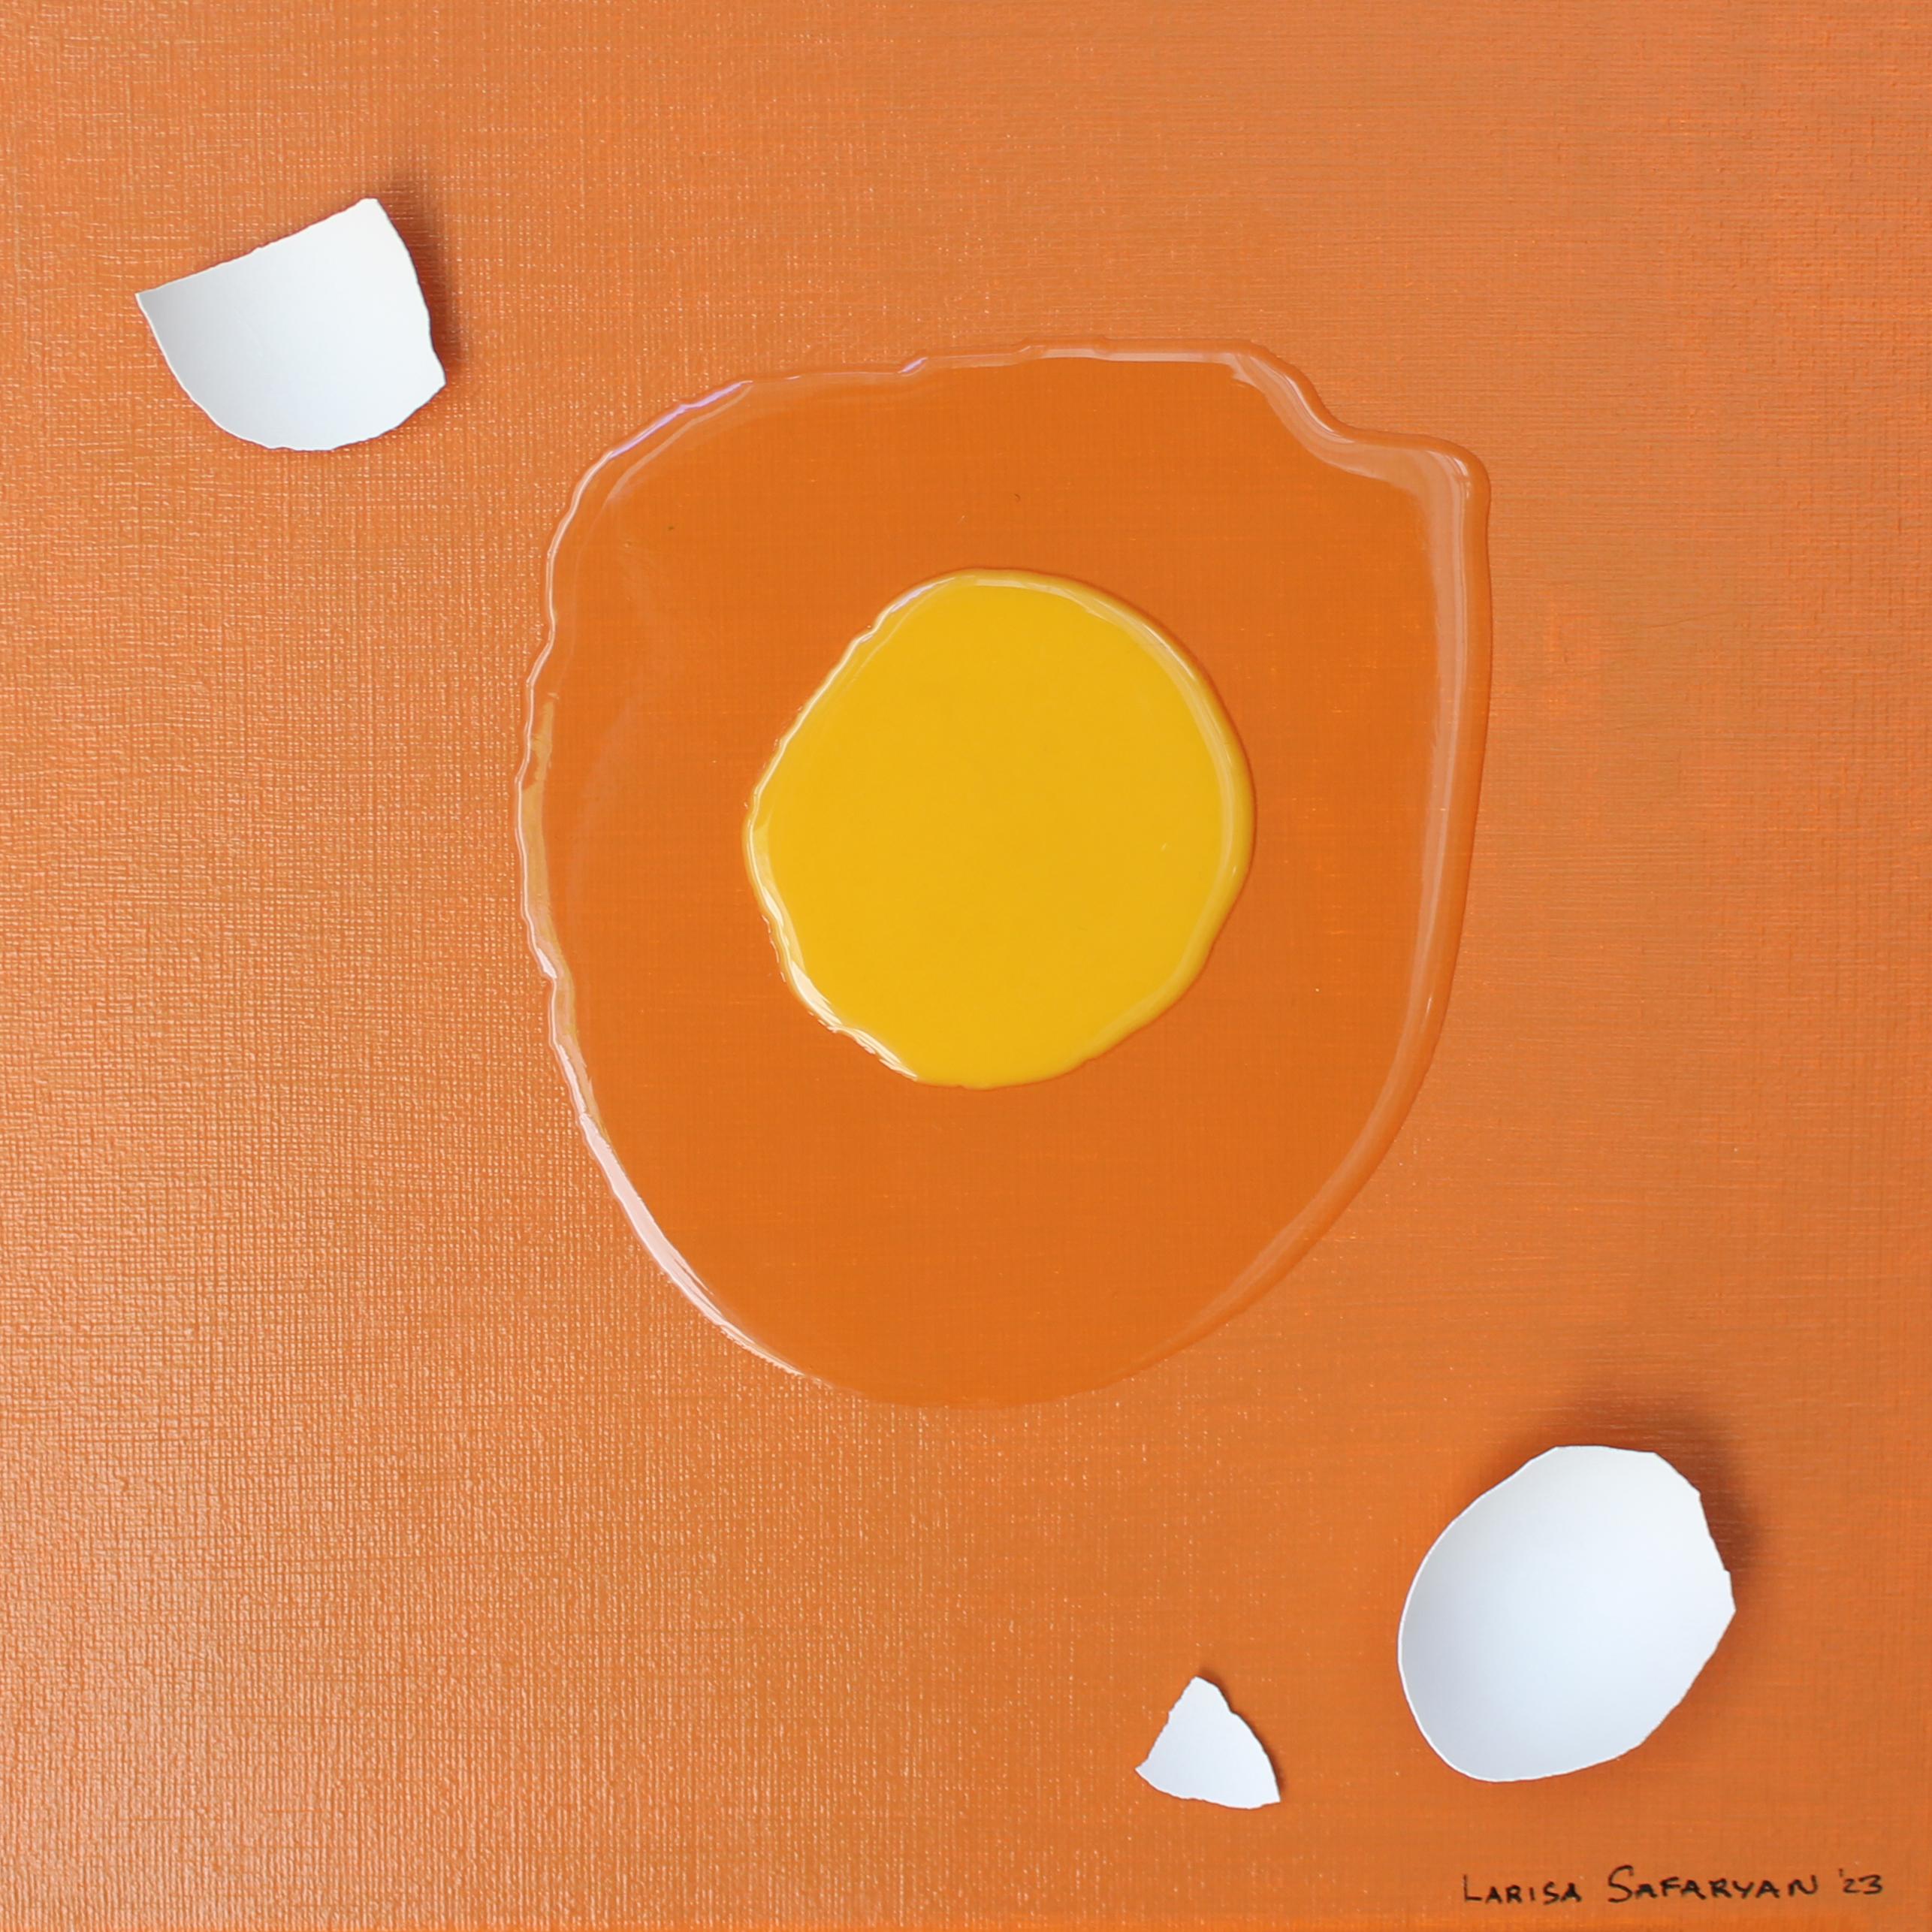 Larisa Safaryan Abstract Painting - Sunny-Side Up 25